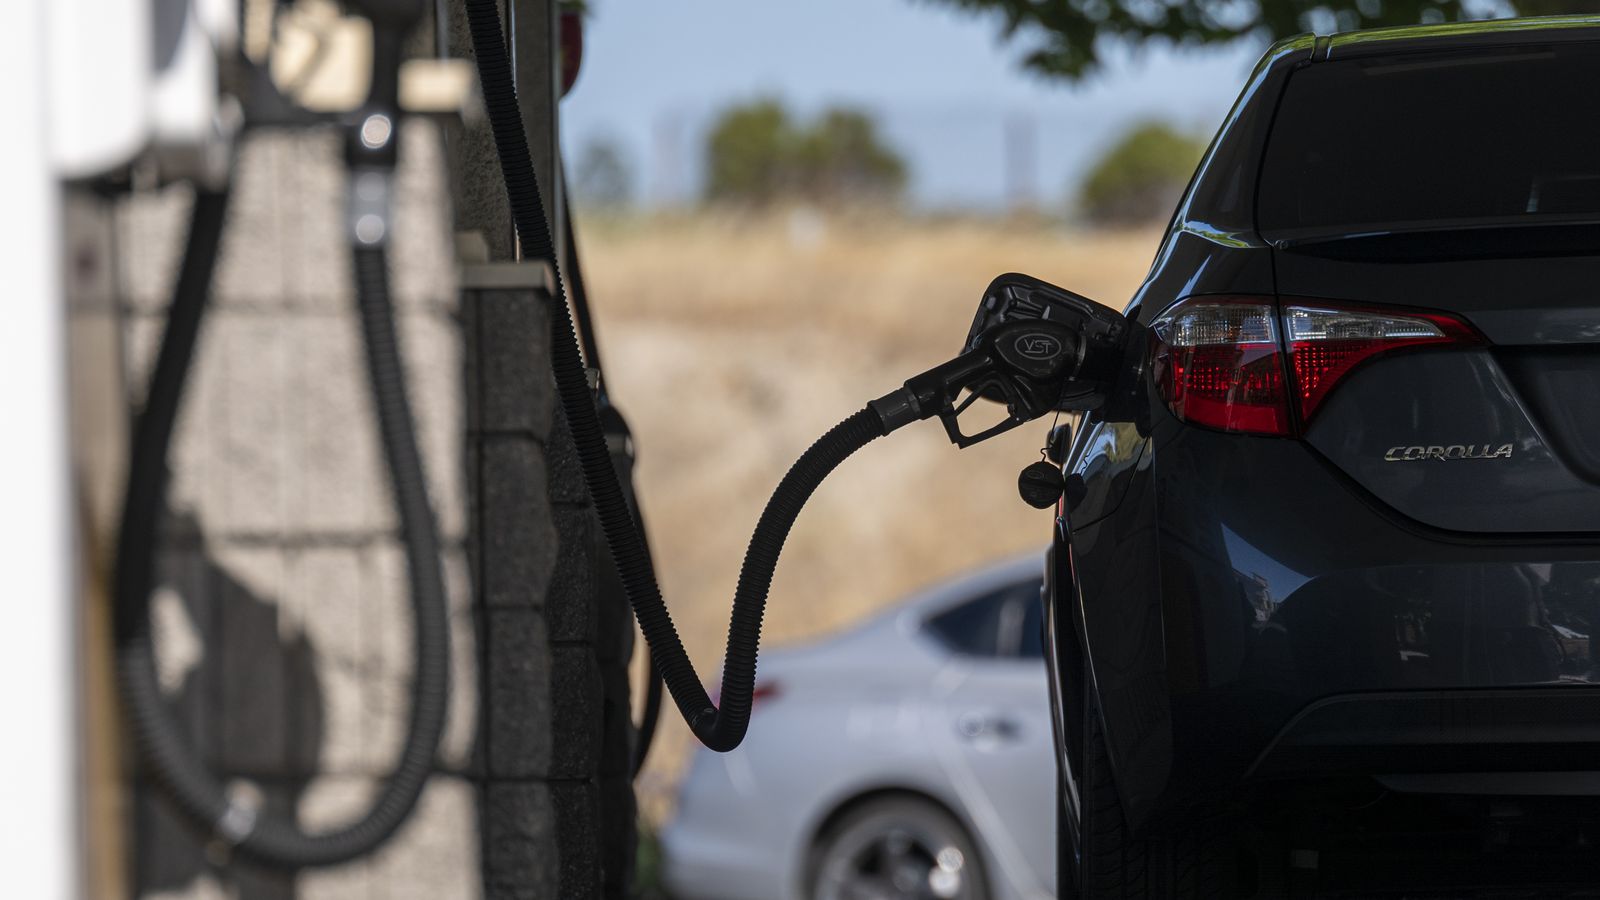 National average gas price falls below 4.50 a gallon